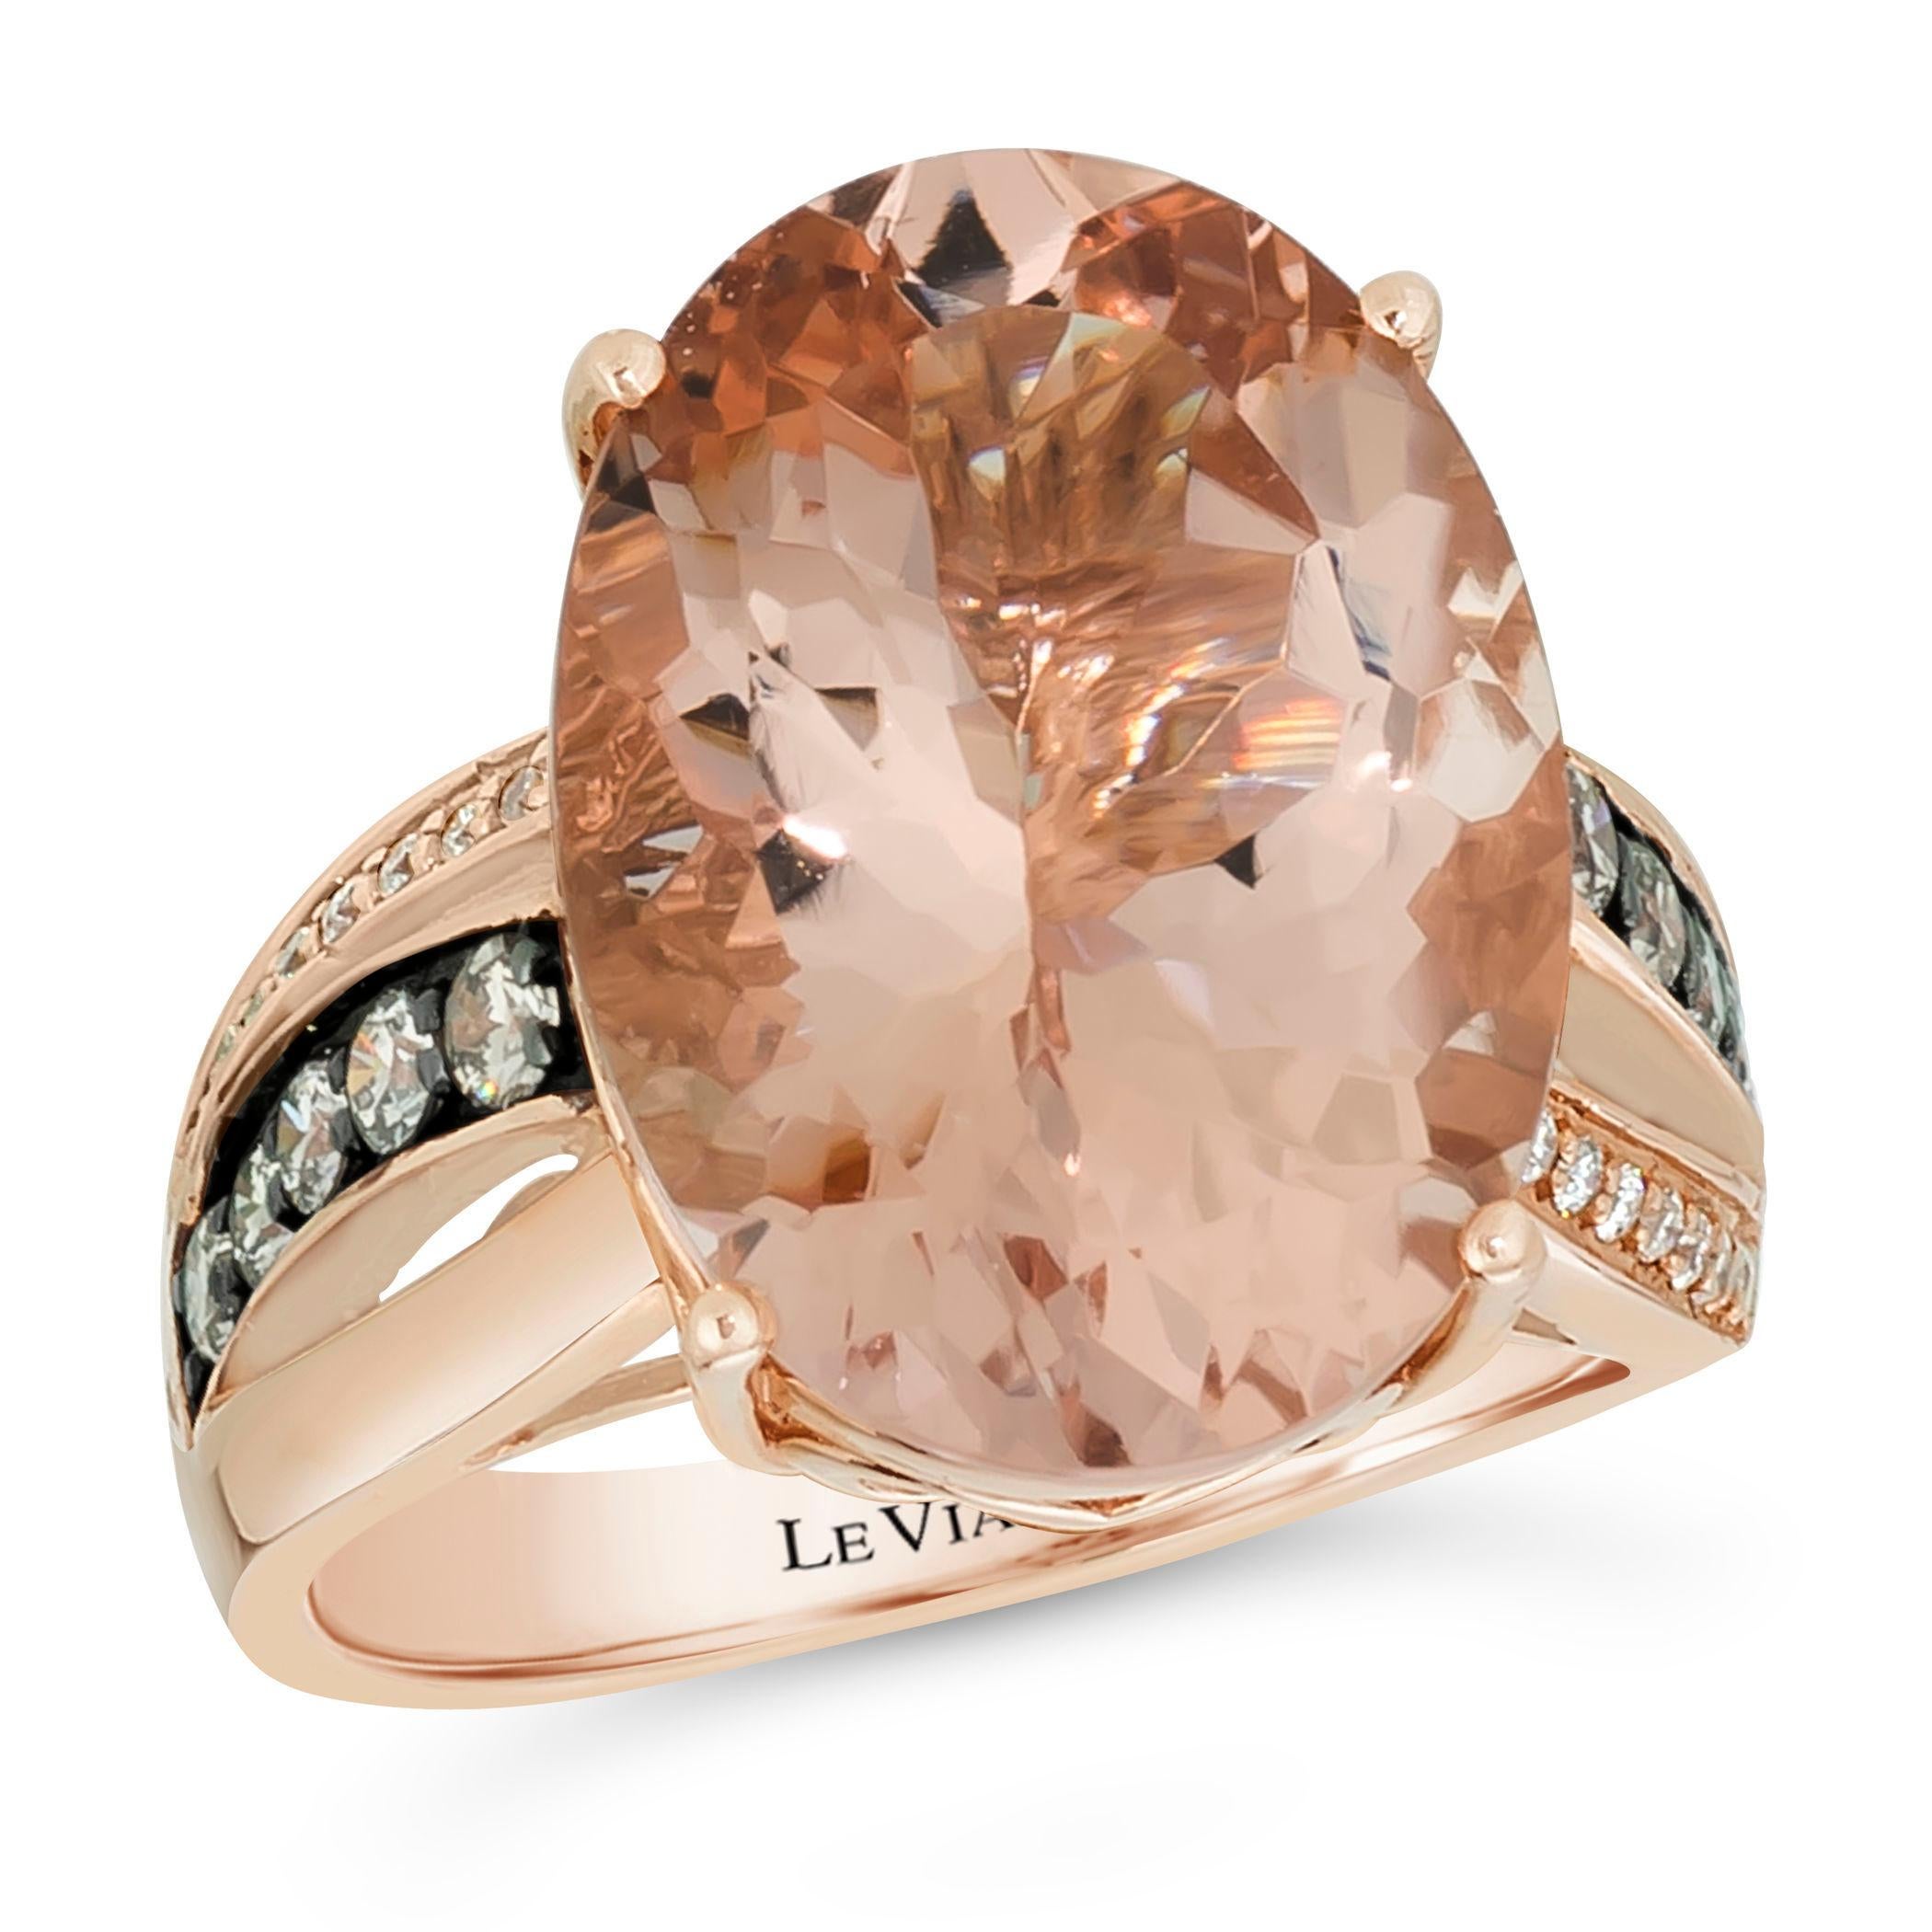 Levian 14K Rose Gold Morganite White Chocolate Diamond Fashion Ring Size 7
